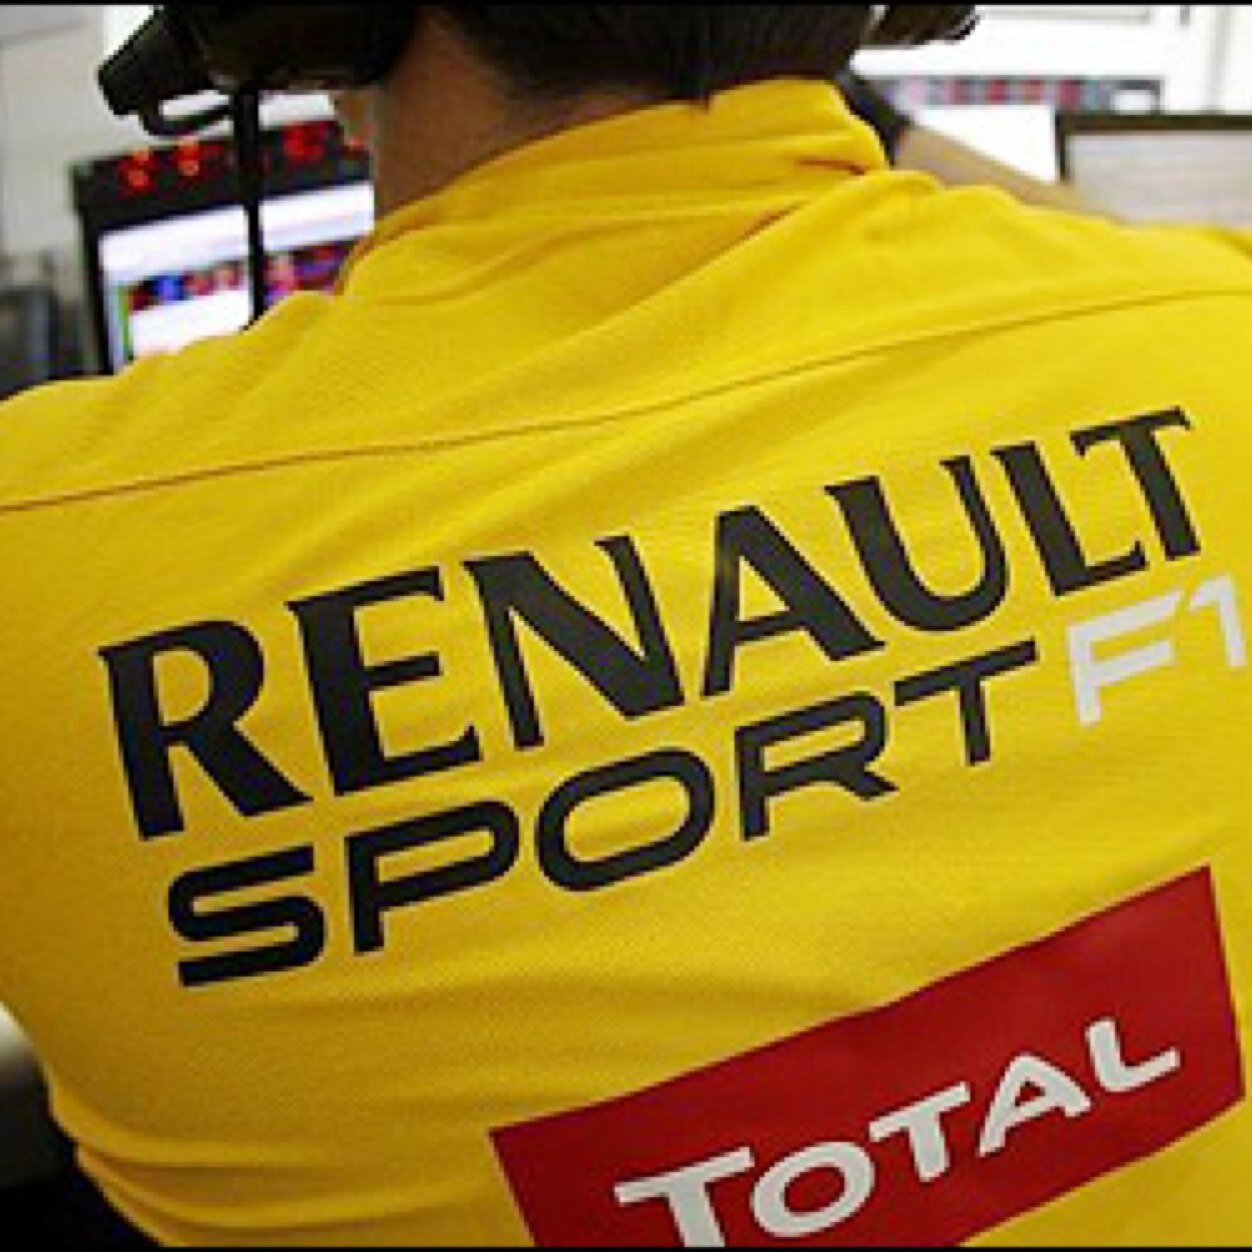 RenaultF1Sport